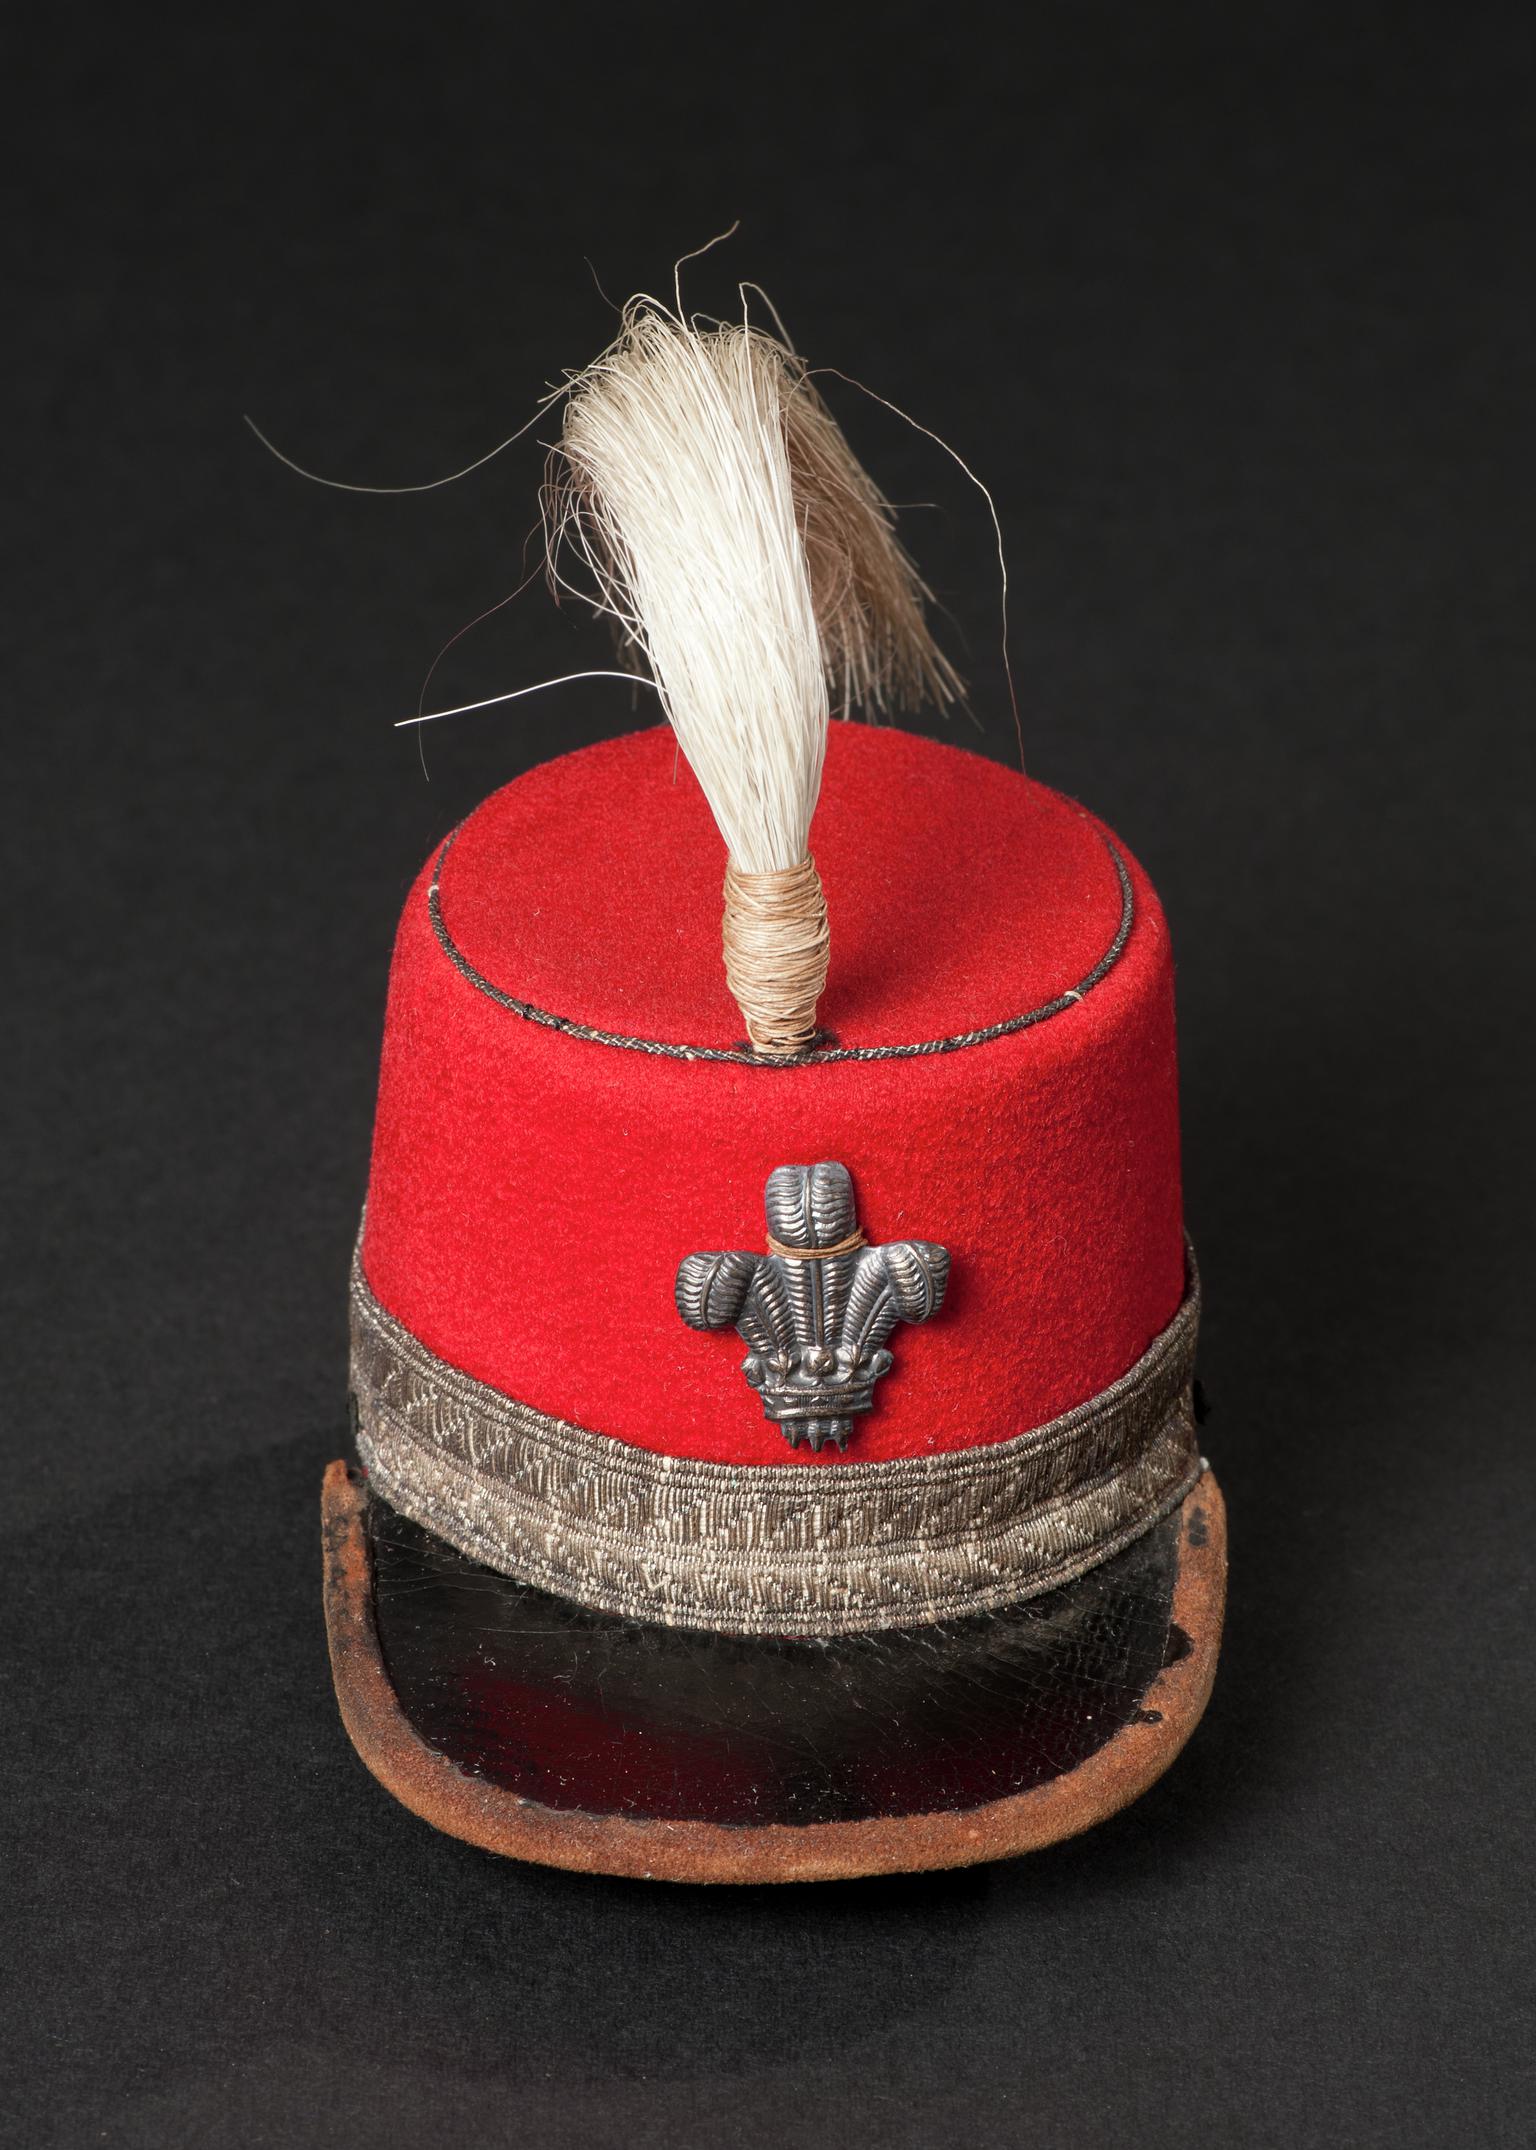 Miniature hat